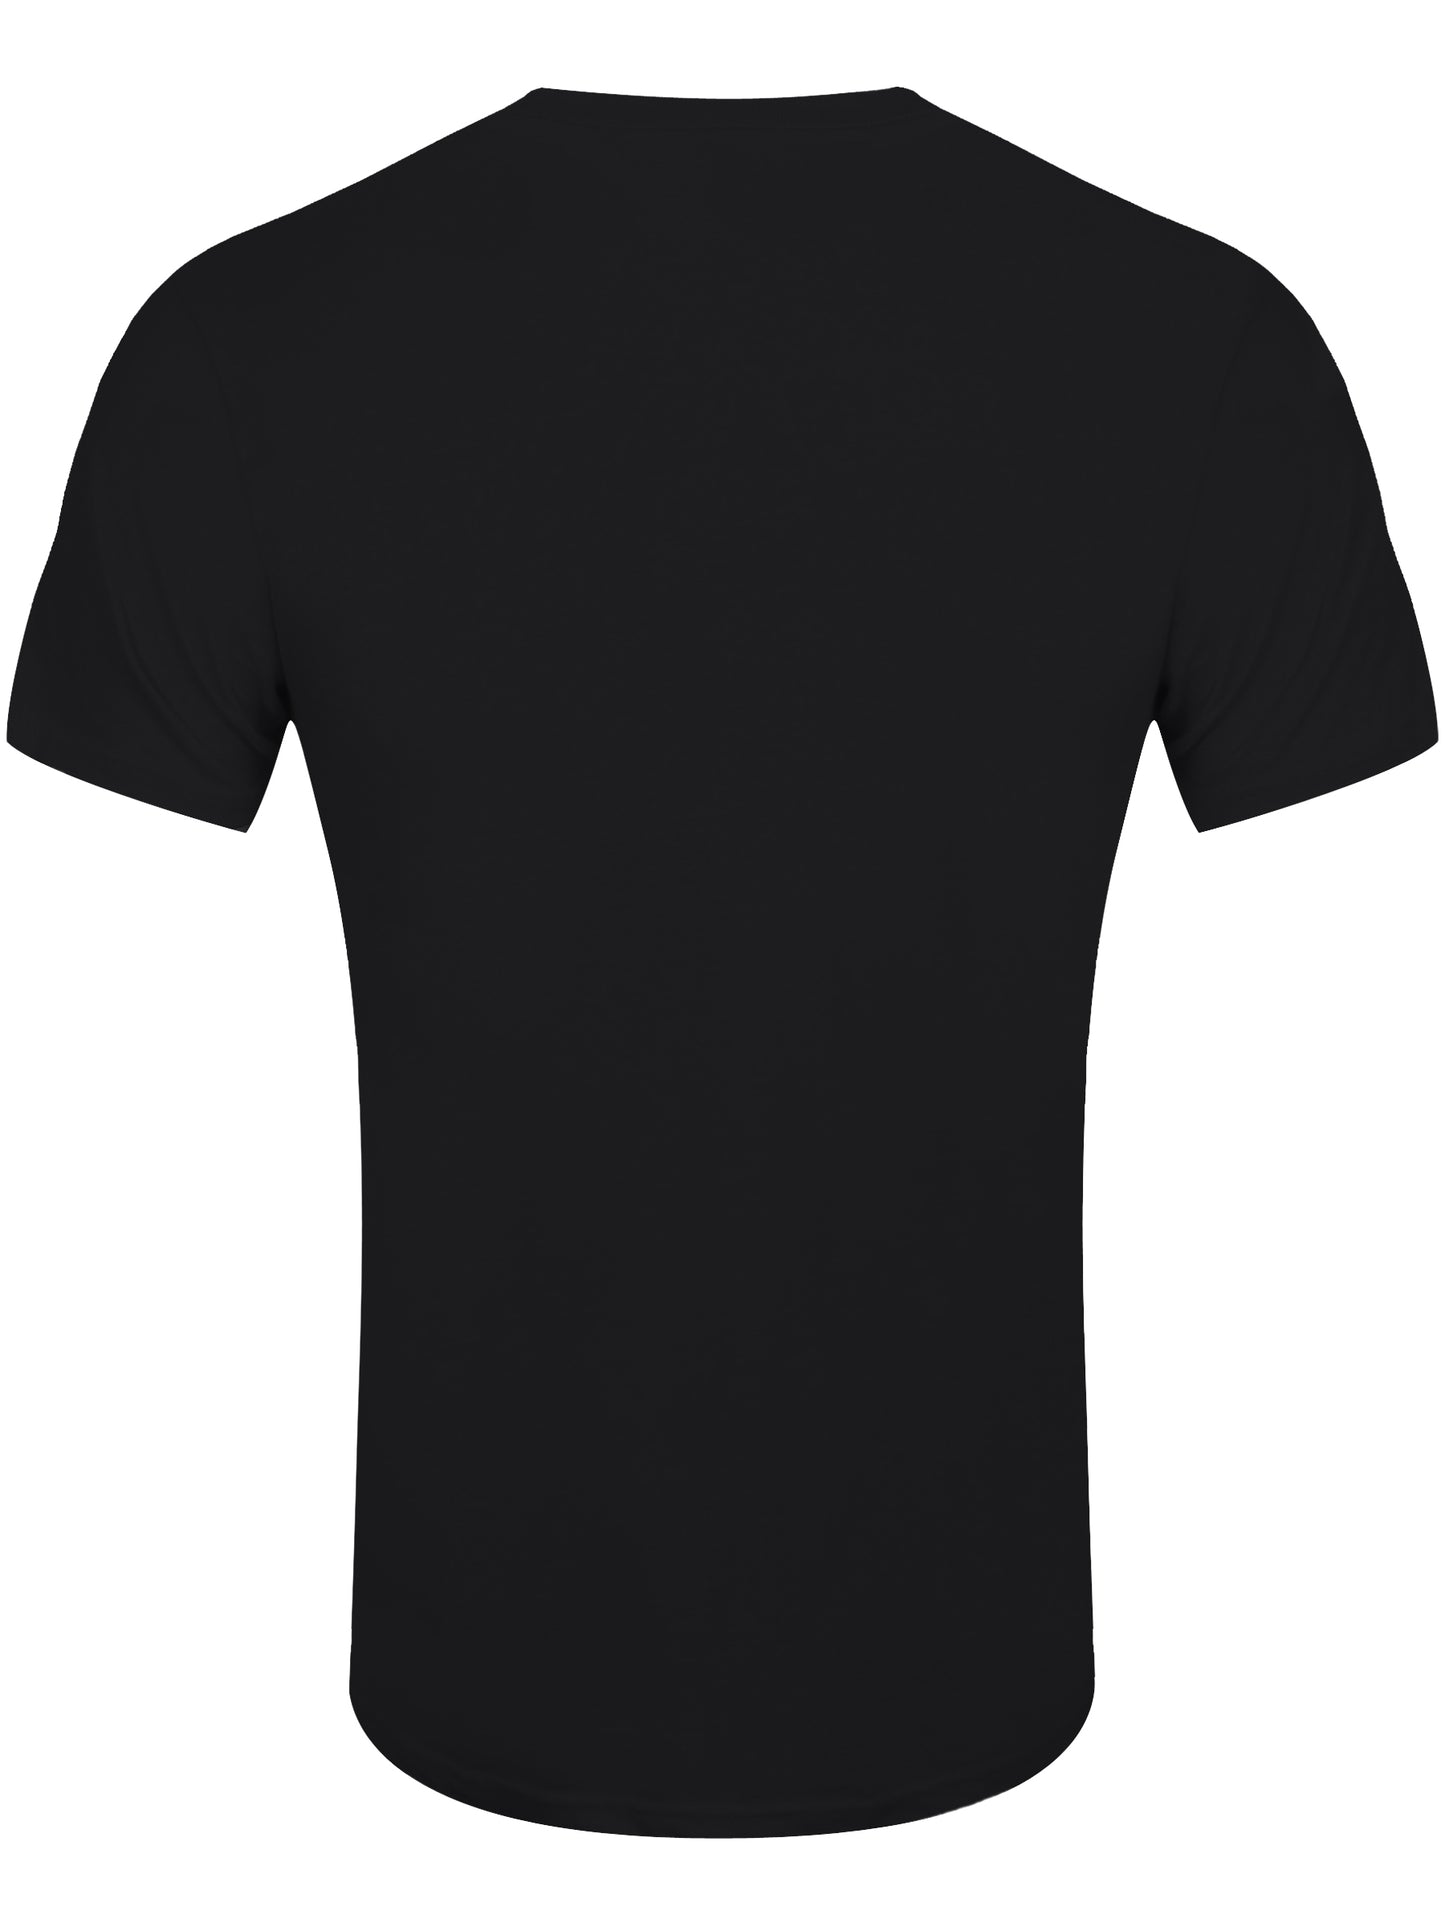 AC/DC Thunderstruck Men's Black T-Shirt